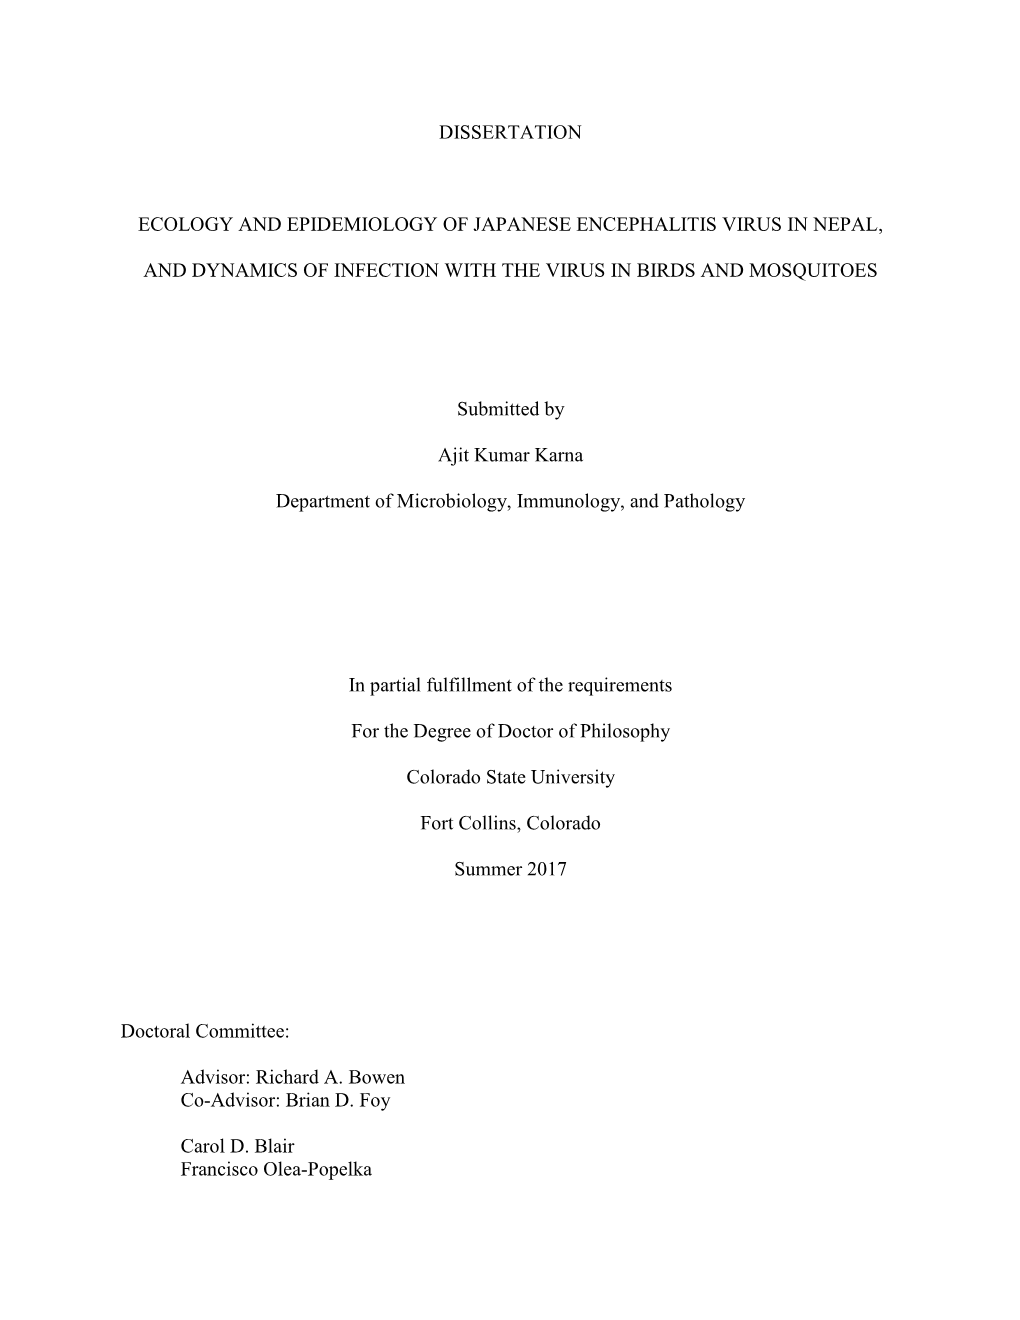 Dissertation Ecology and Epidemiology of Japanese